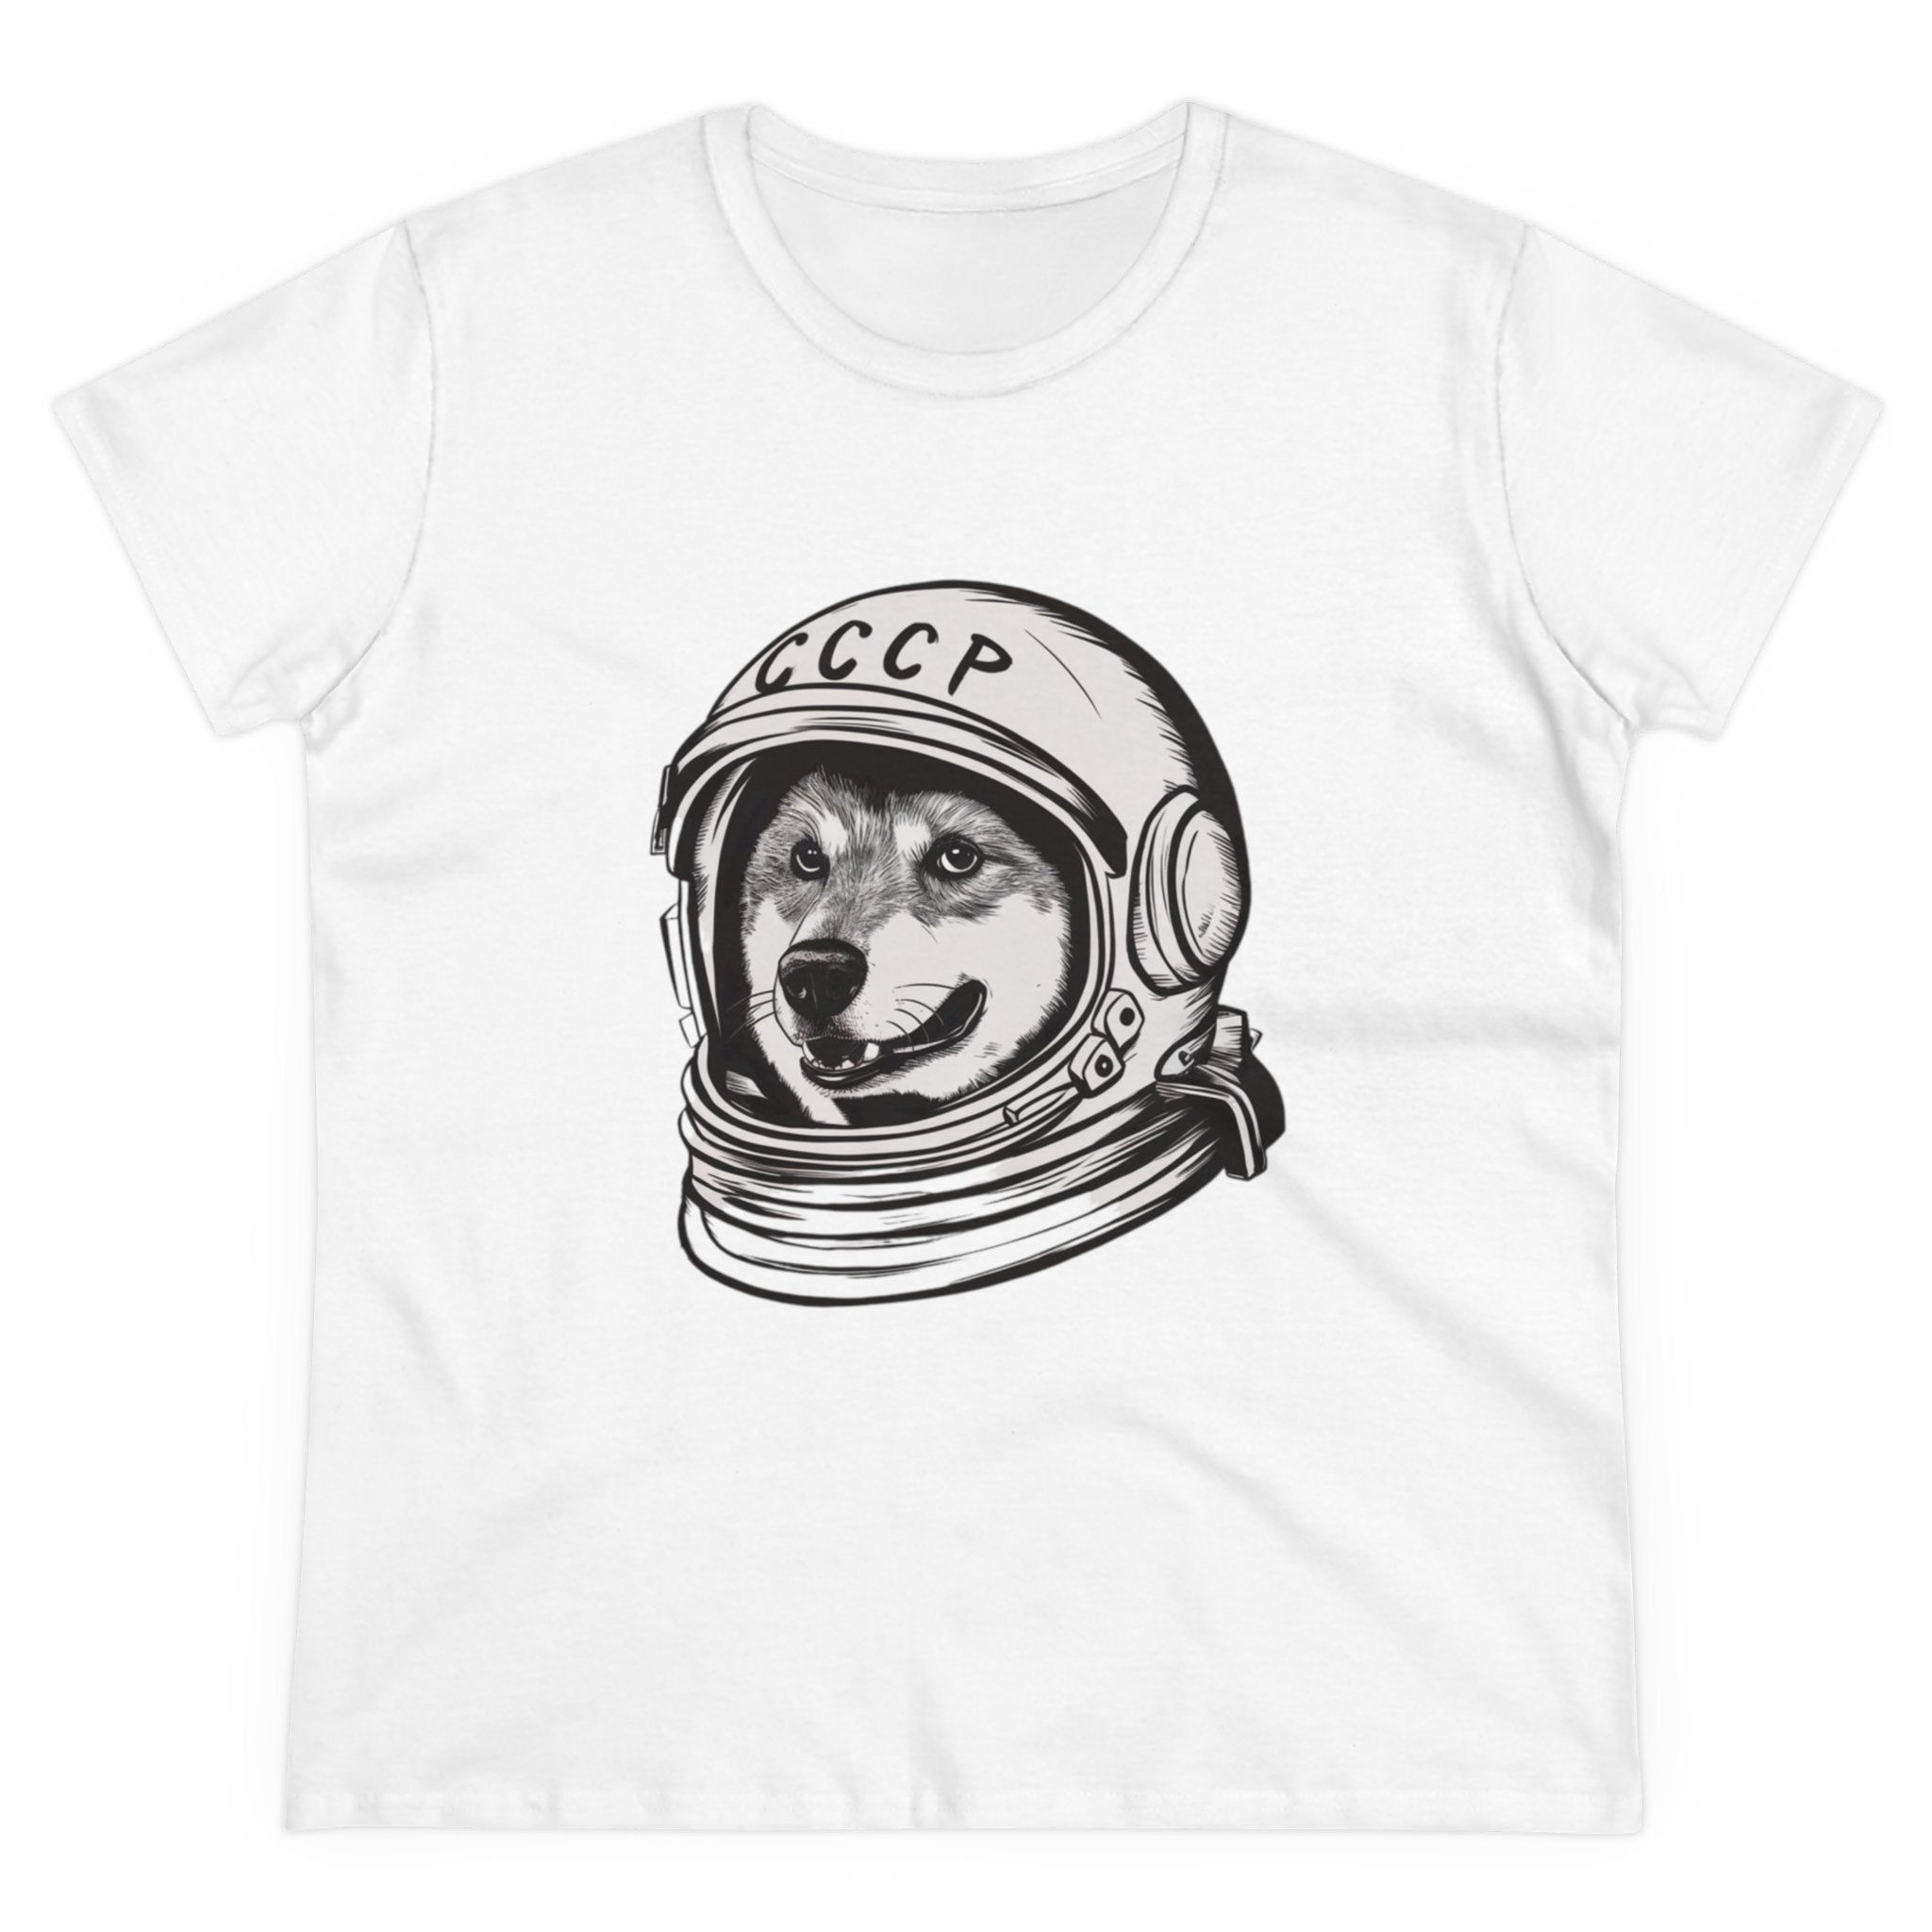 CCCP Astronaut Dog - Women's Tee